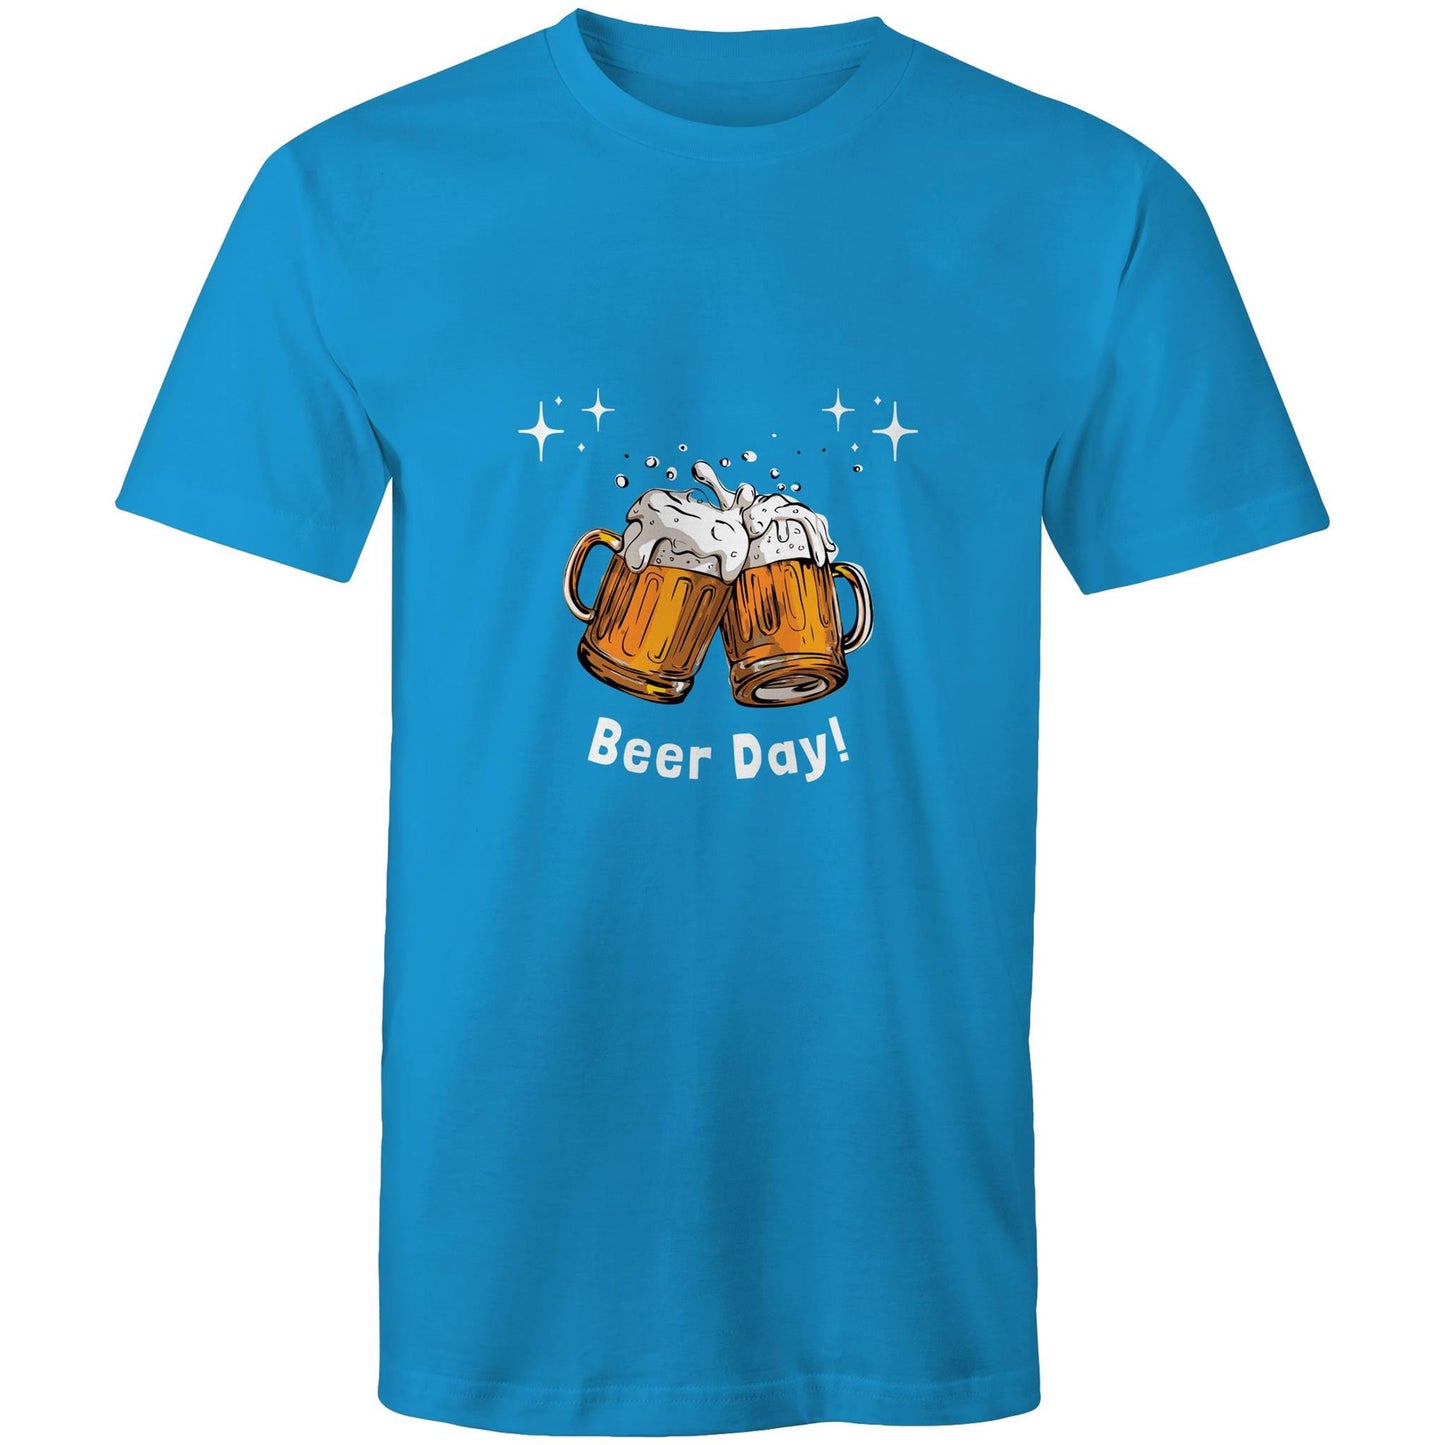 Beer Day - Mens T-Shirt